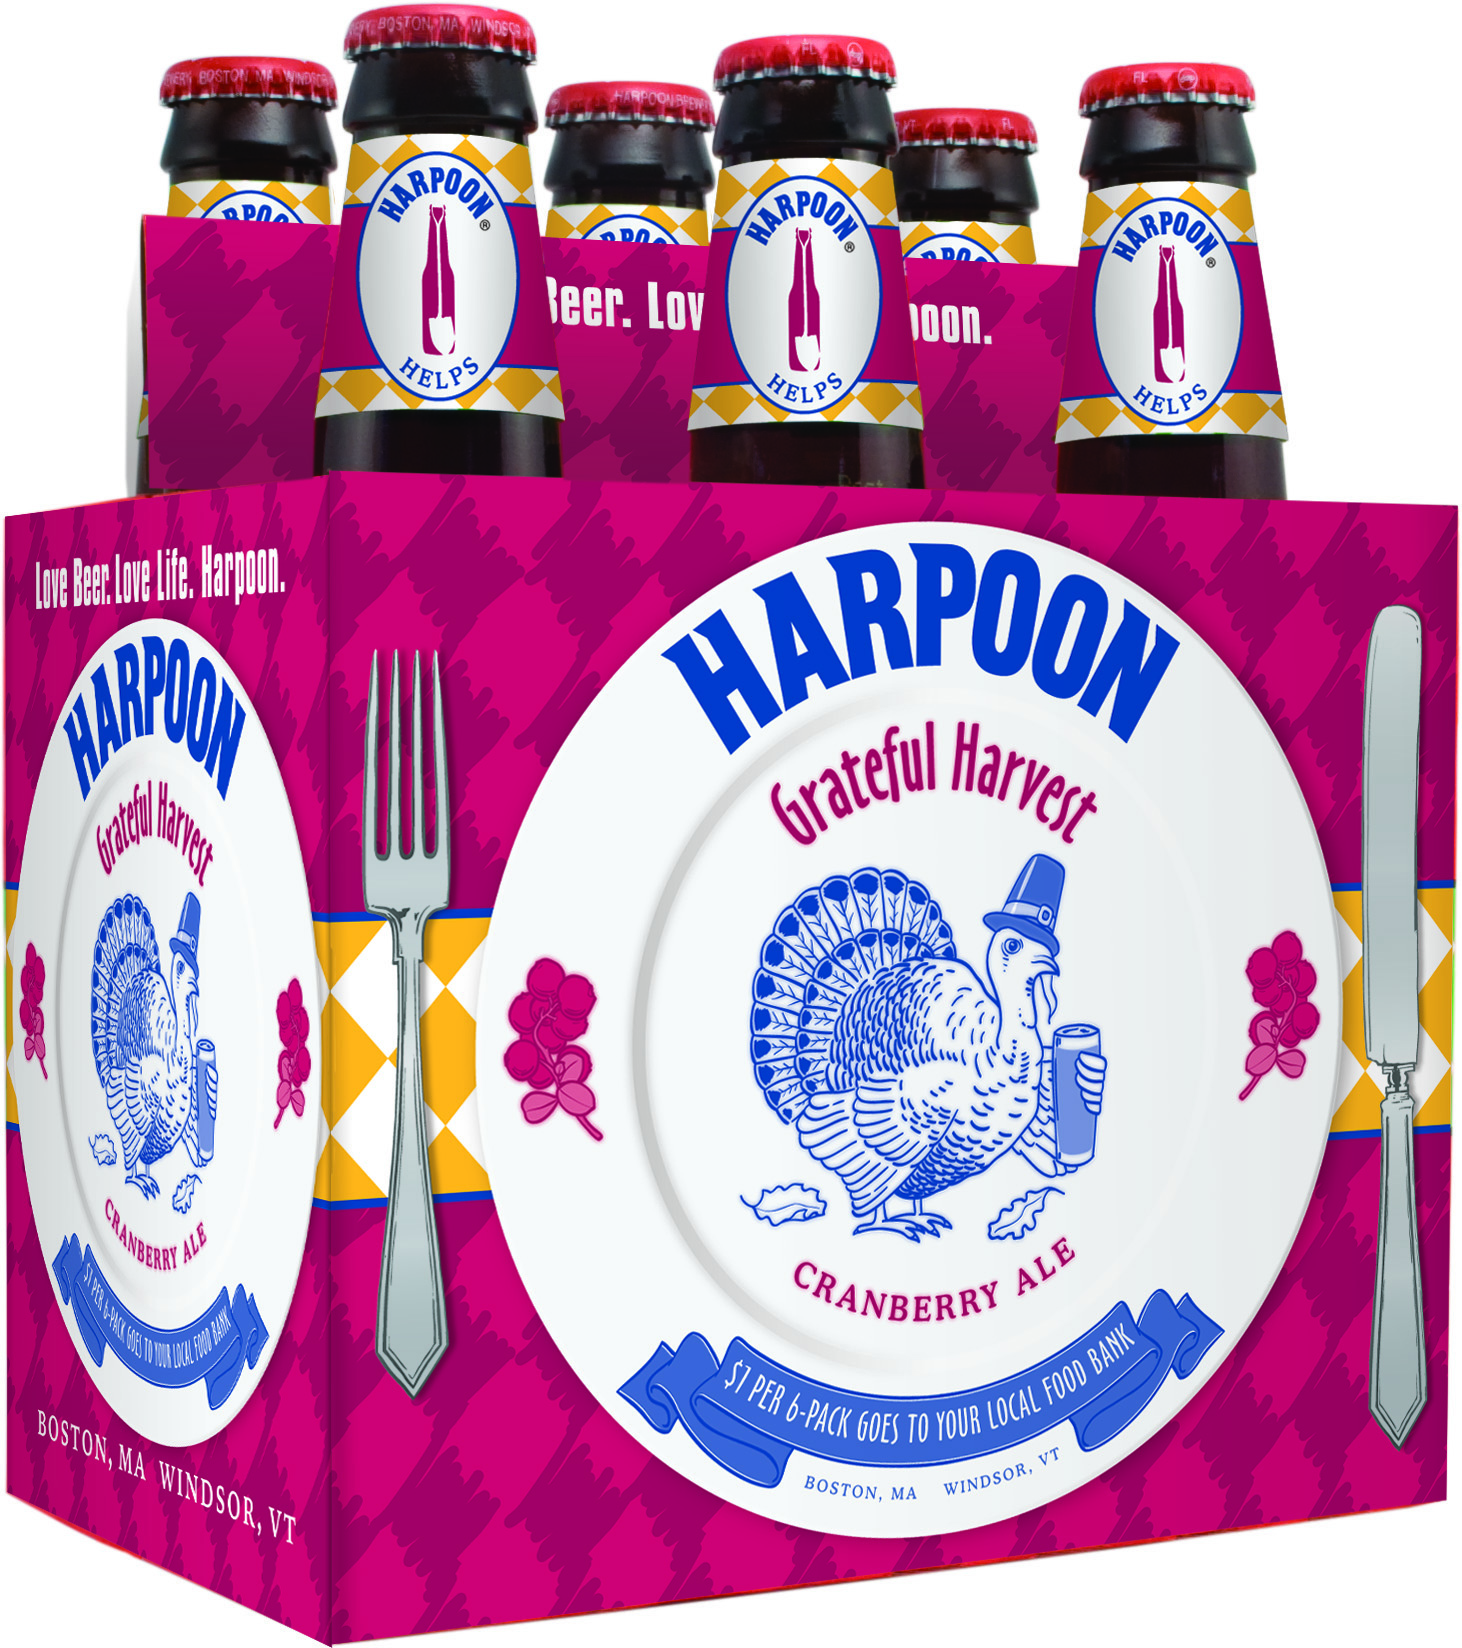 Harpoon’s Grateful Harvest Ale To Benefit Local Food Bank